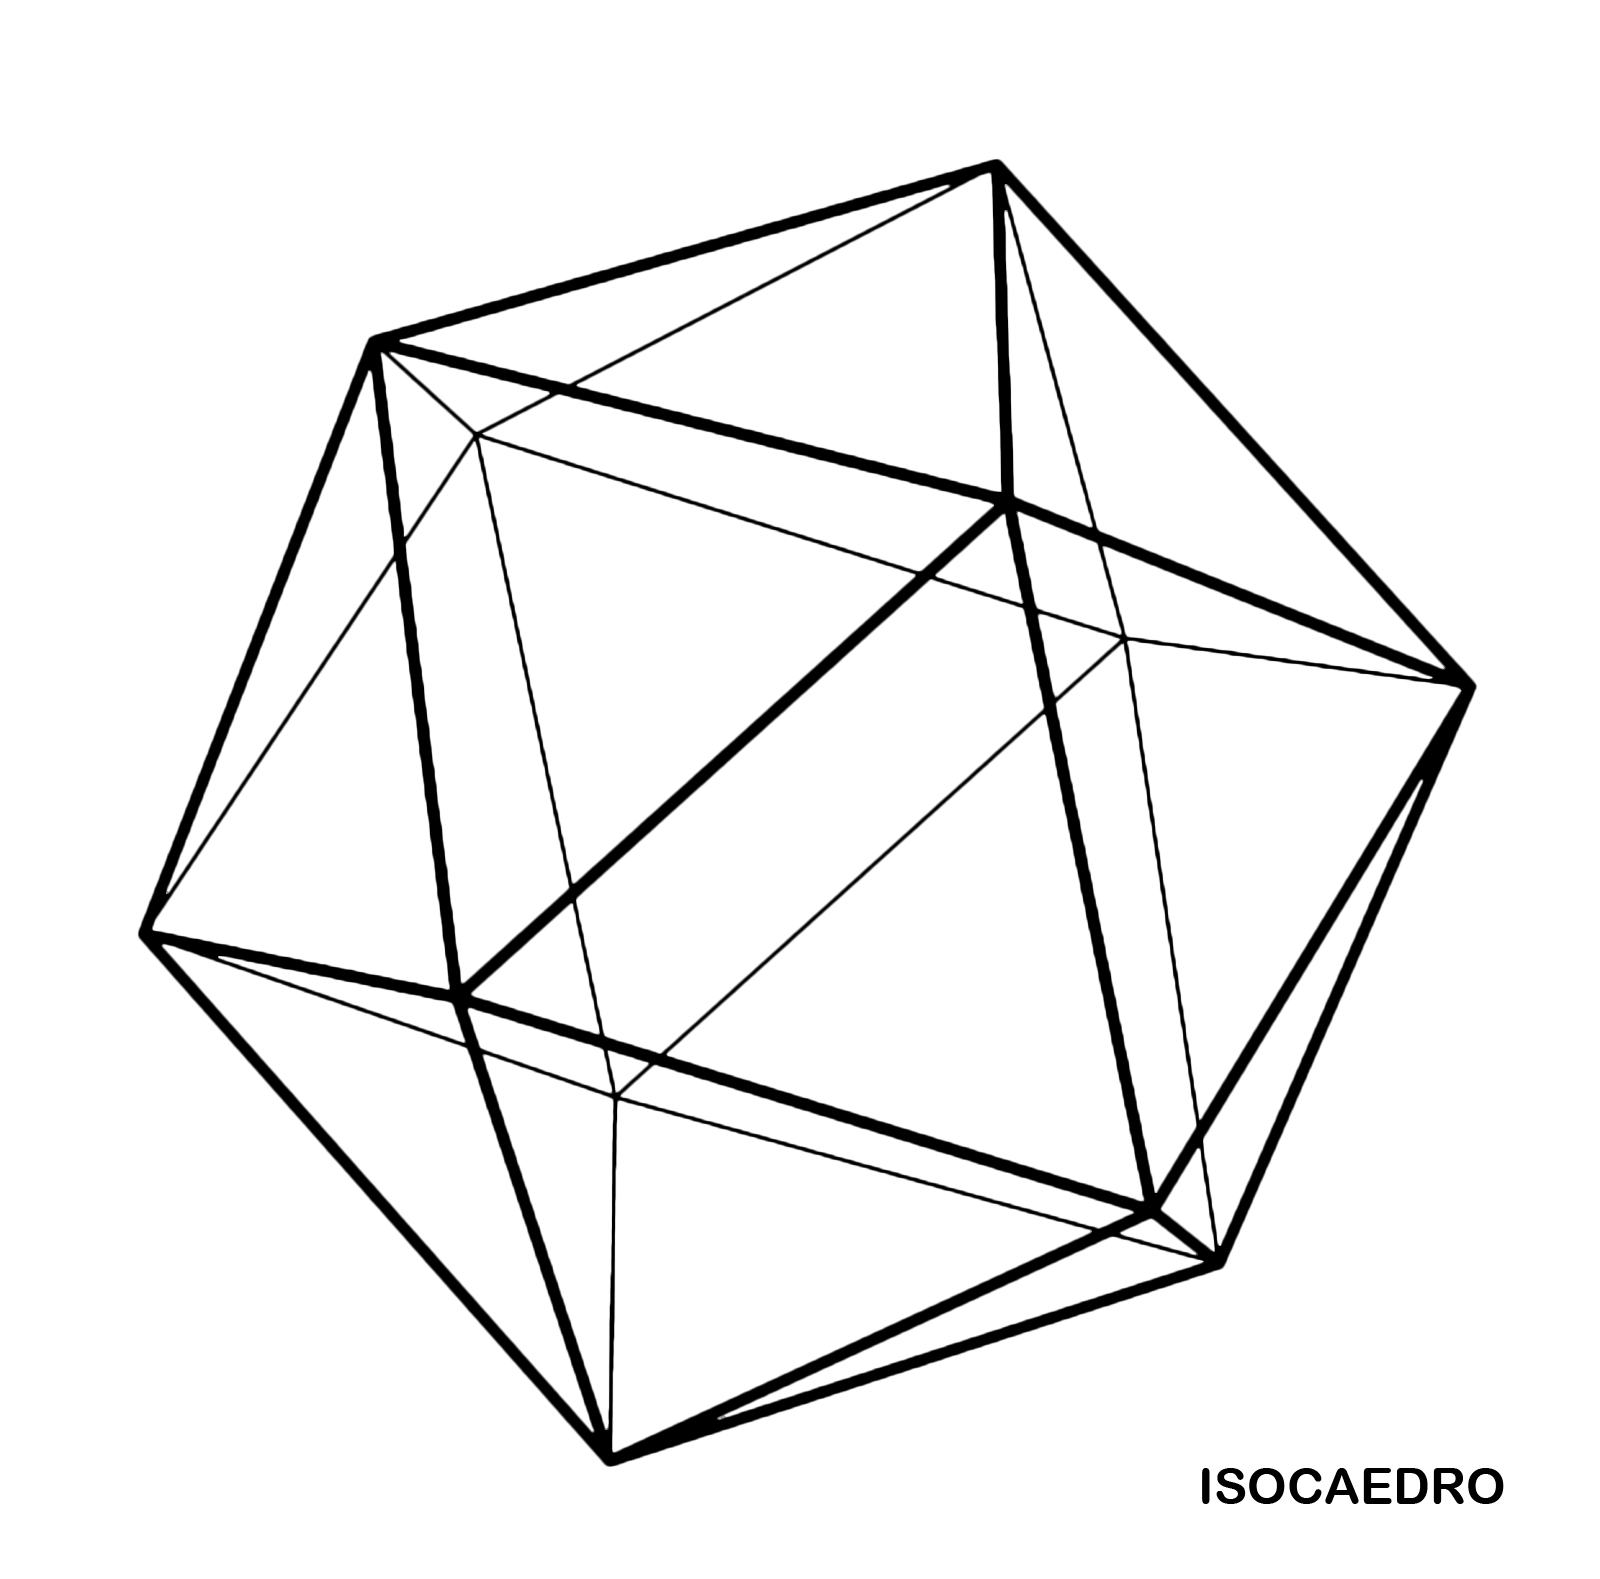 Figure geometriche - Figura geometrica solida - Isocaedro